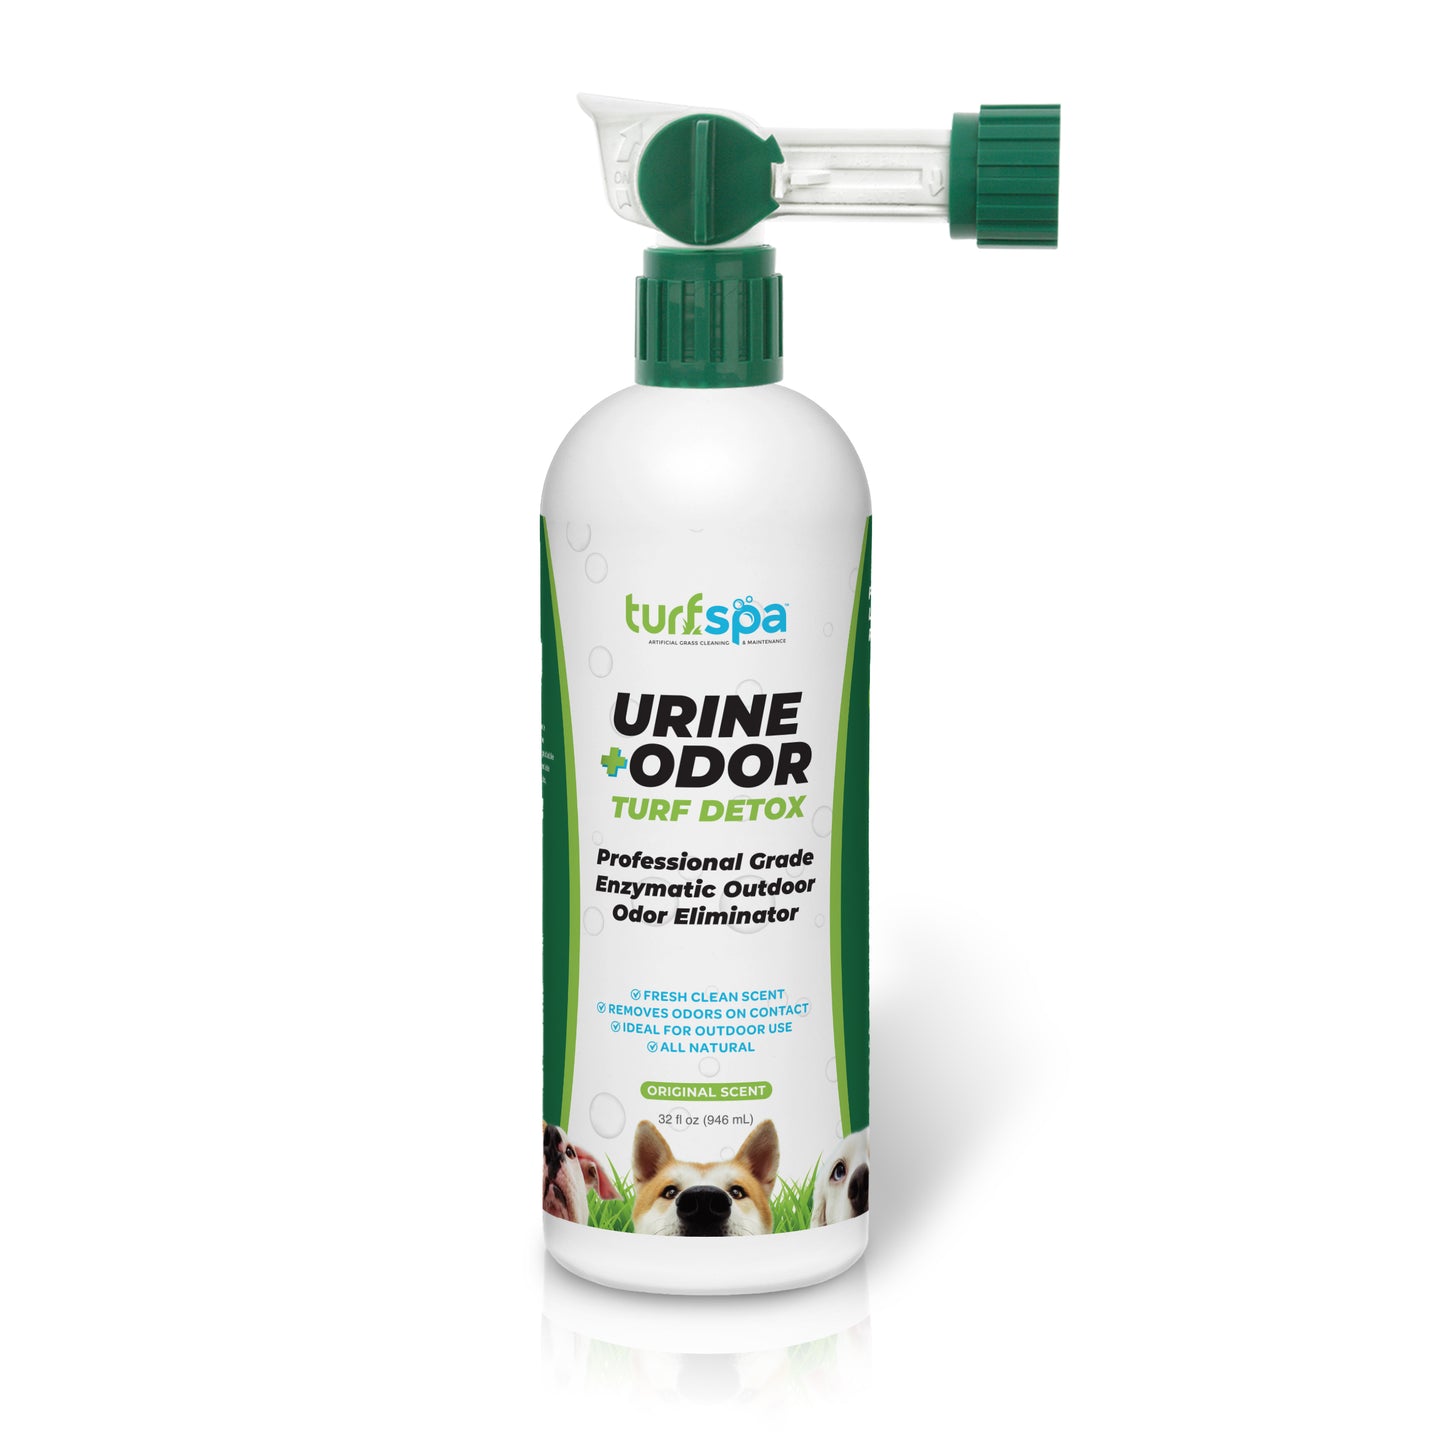 Urine + Odor Turf Detox